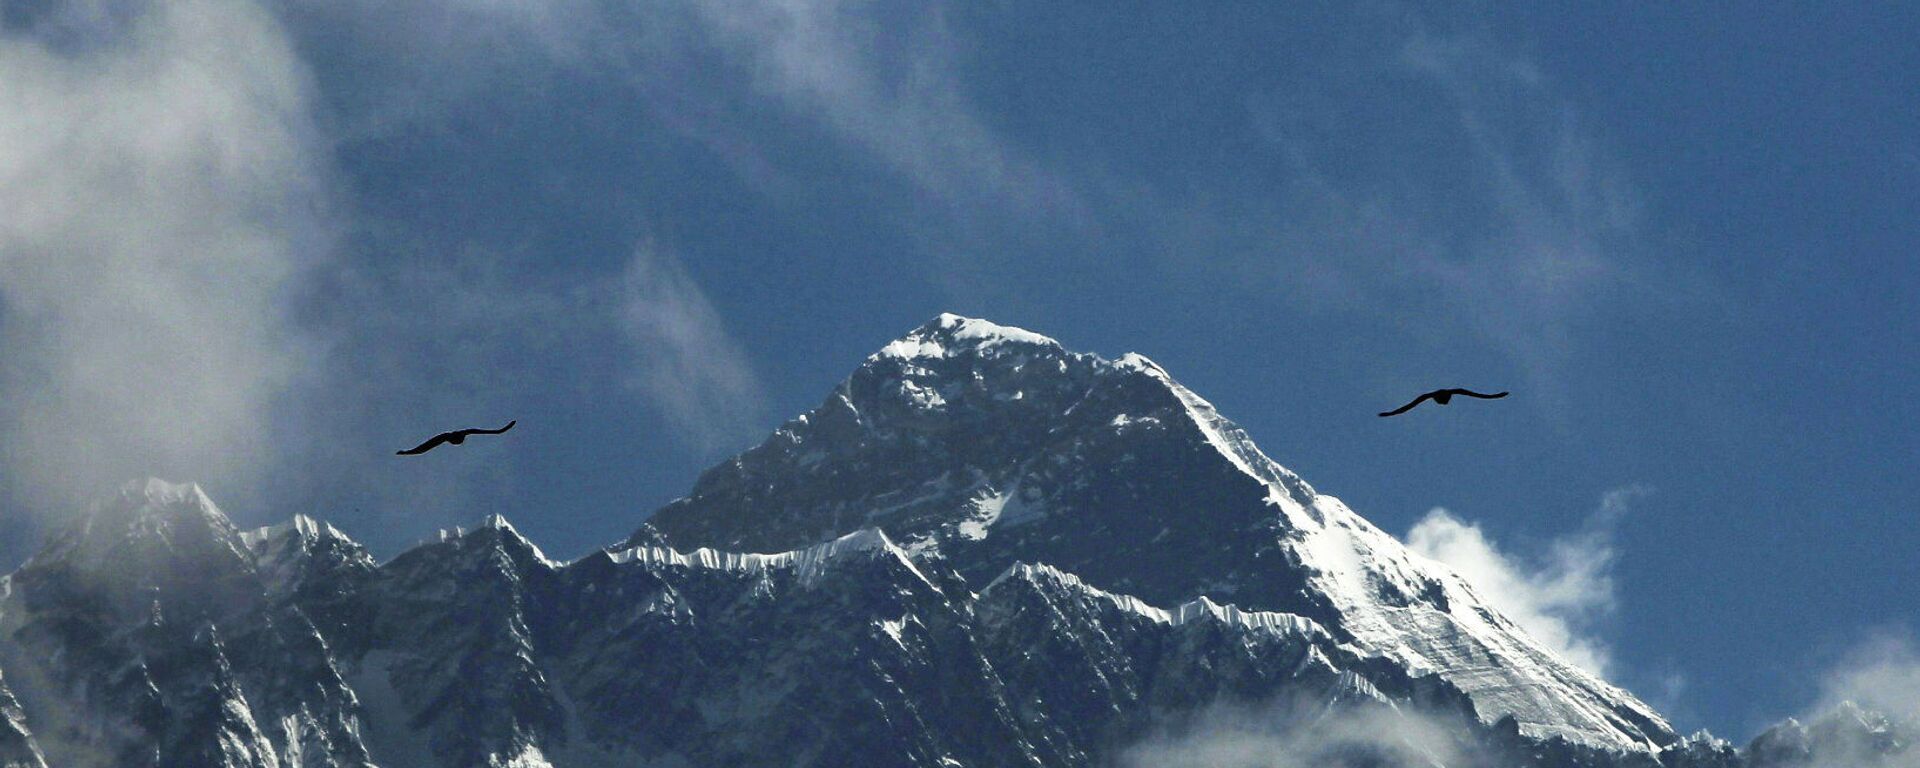 El monte Everest - Sputnik Mundo, 1920, 08.12.2020